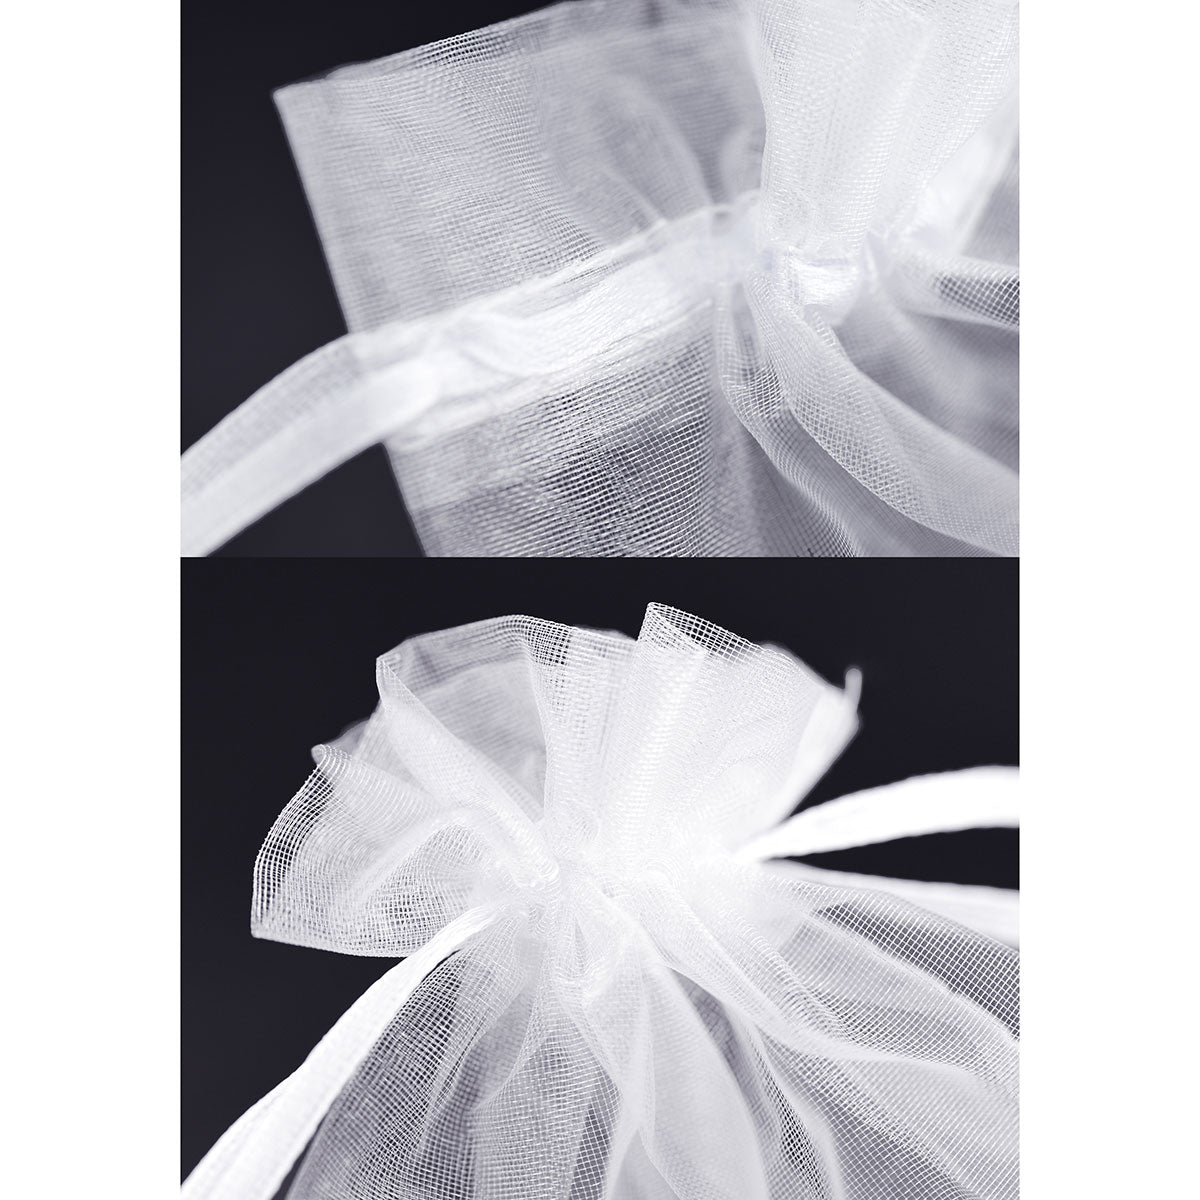 White Organza Bags with Ribbon Drawstring (Medium) 100 Pcs/Pack